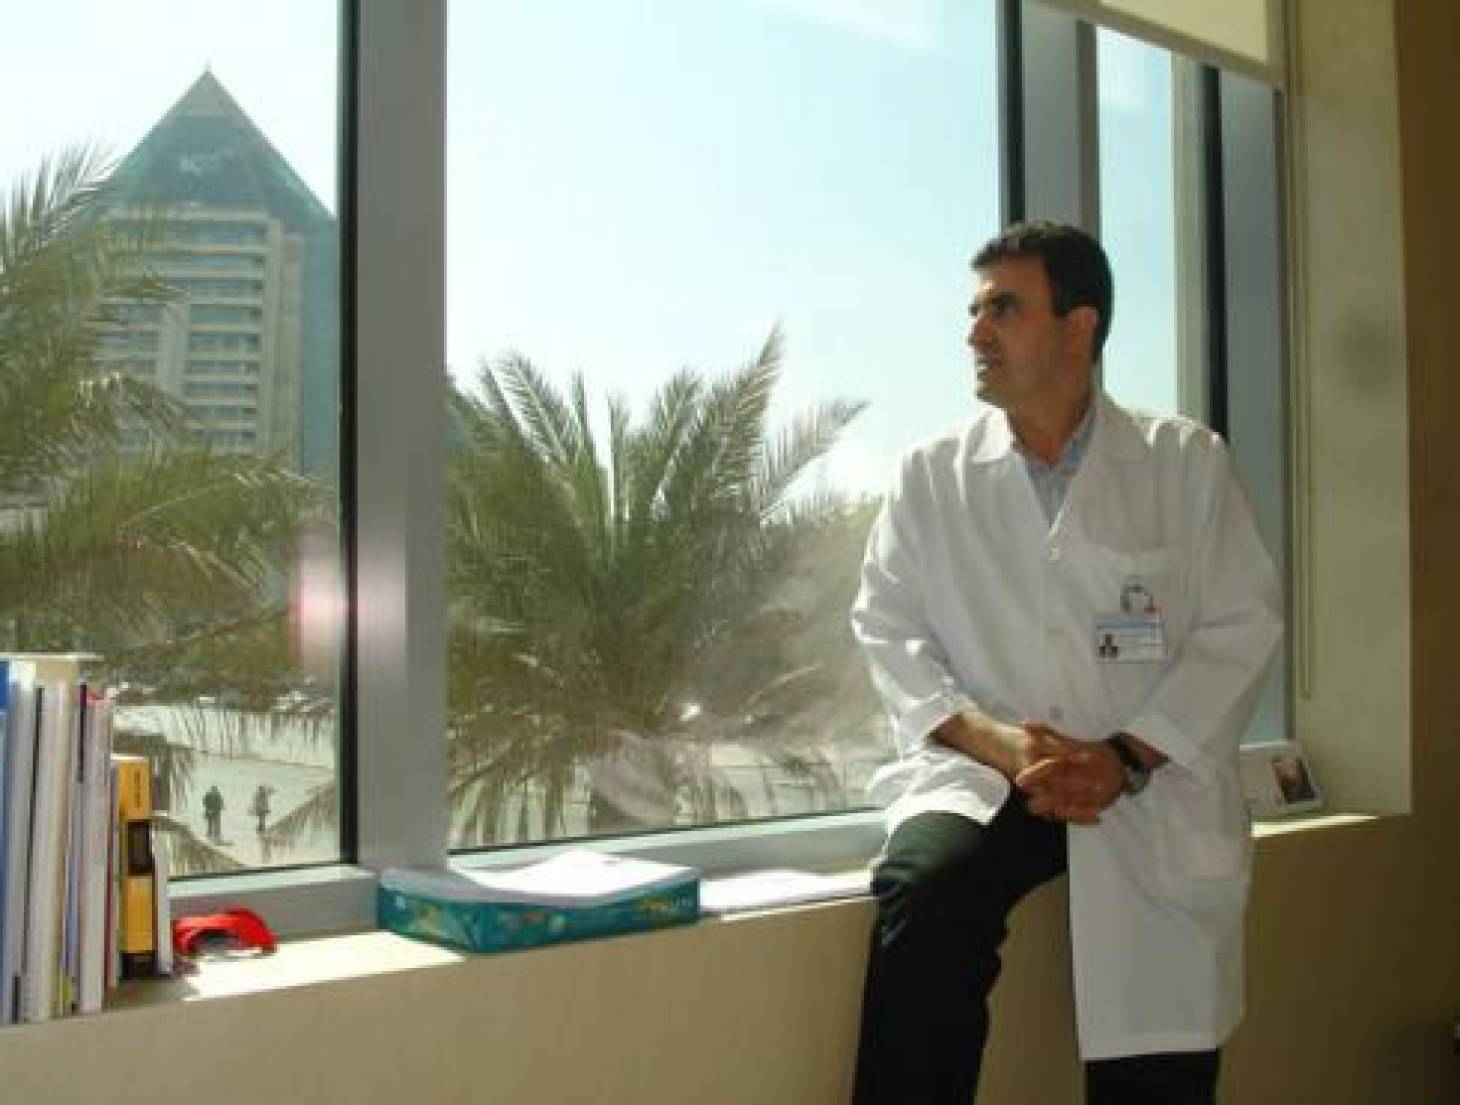 Médecin poitevin à Dubaï